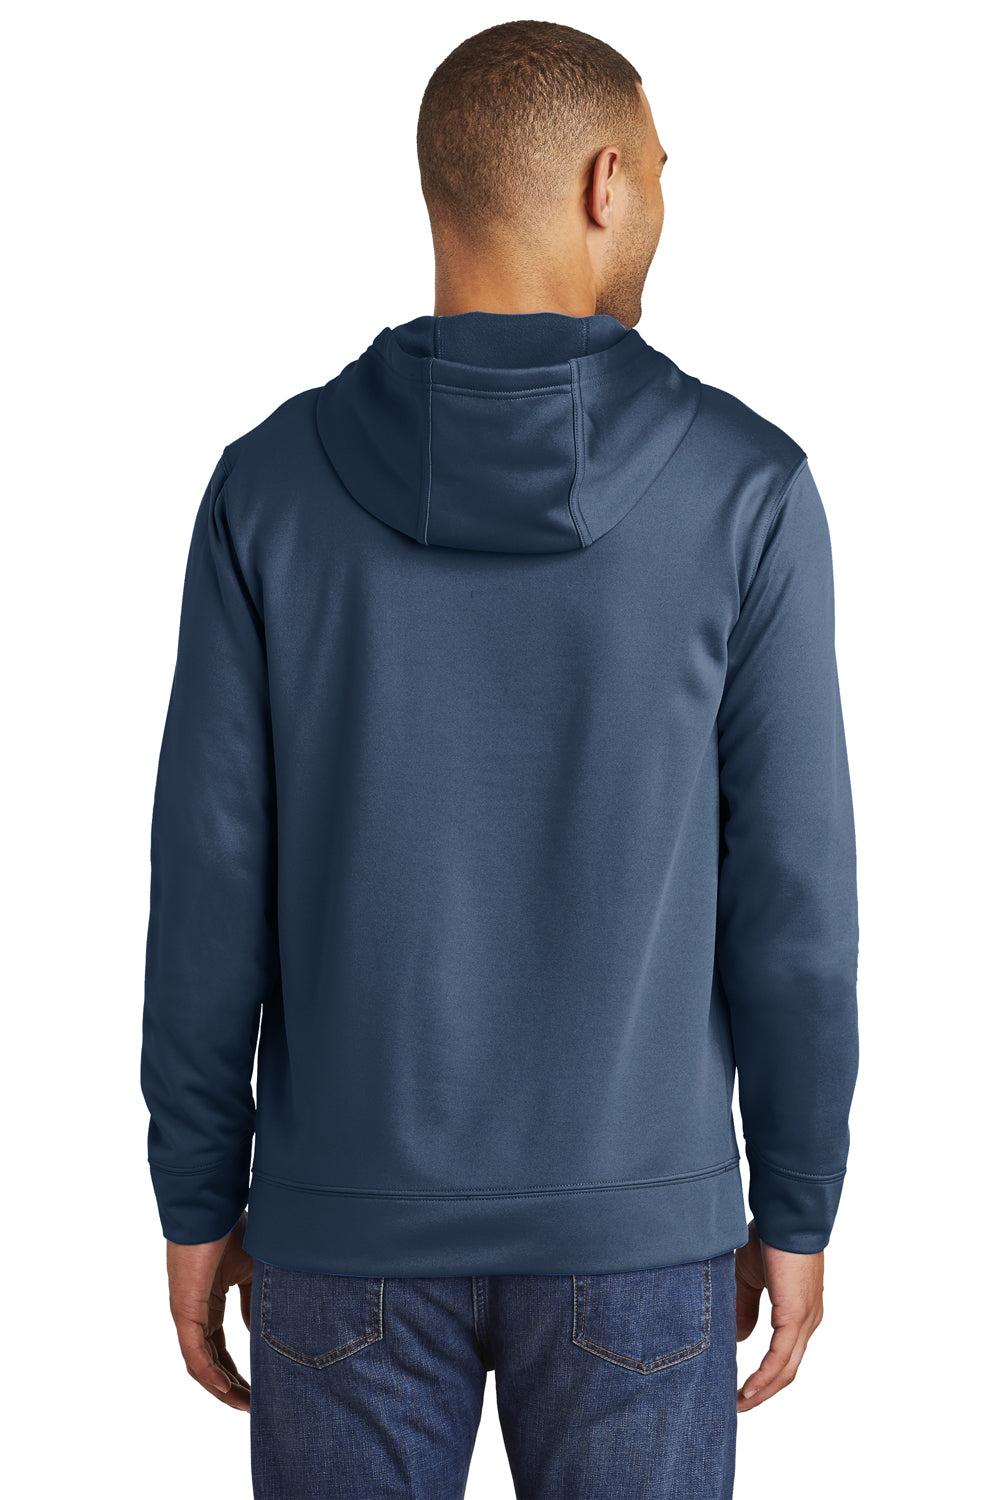 Port & Company PC590H Mens Dry Zone Performance Moisture Wicking Fleece Hooded Sweatshirt Hoodie Navy Blue Back